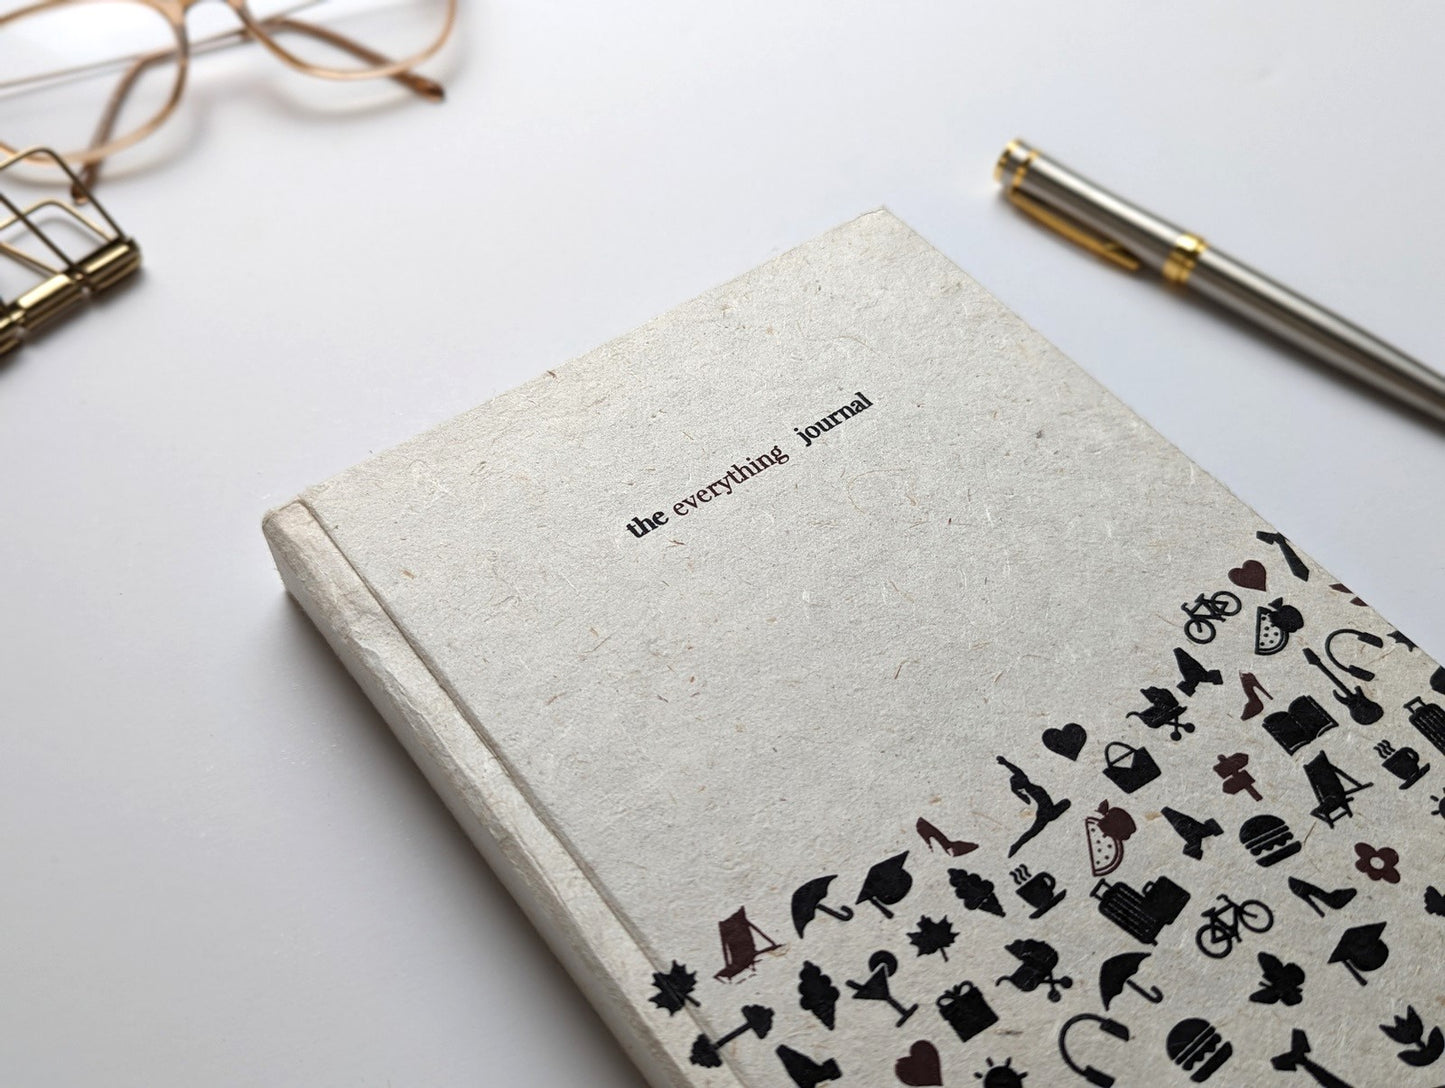 Handmade Paper Journal | Everything Journal - Natural Beige